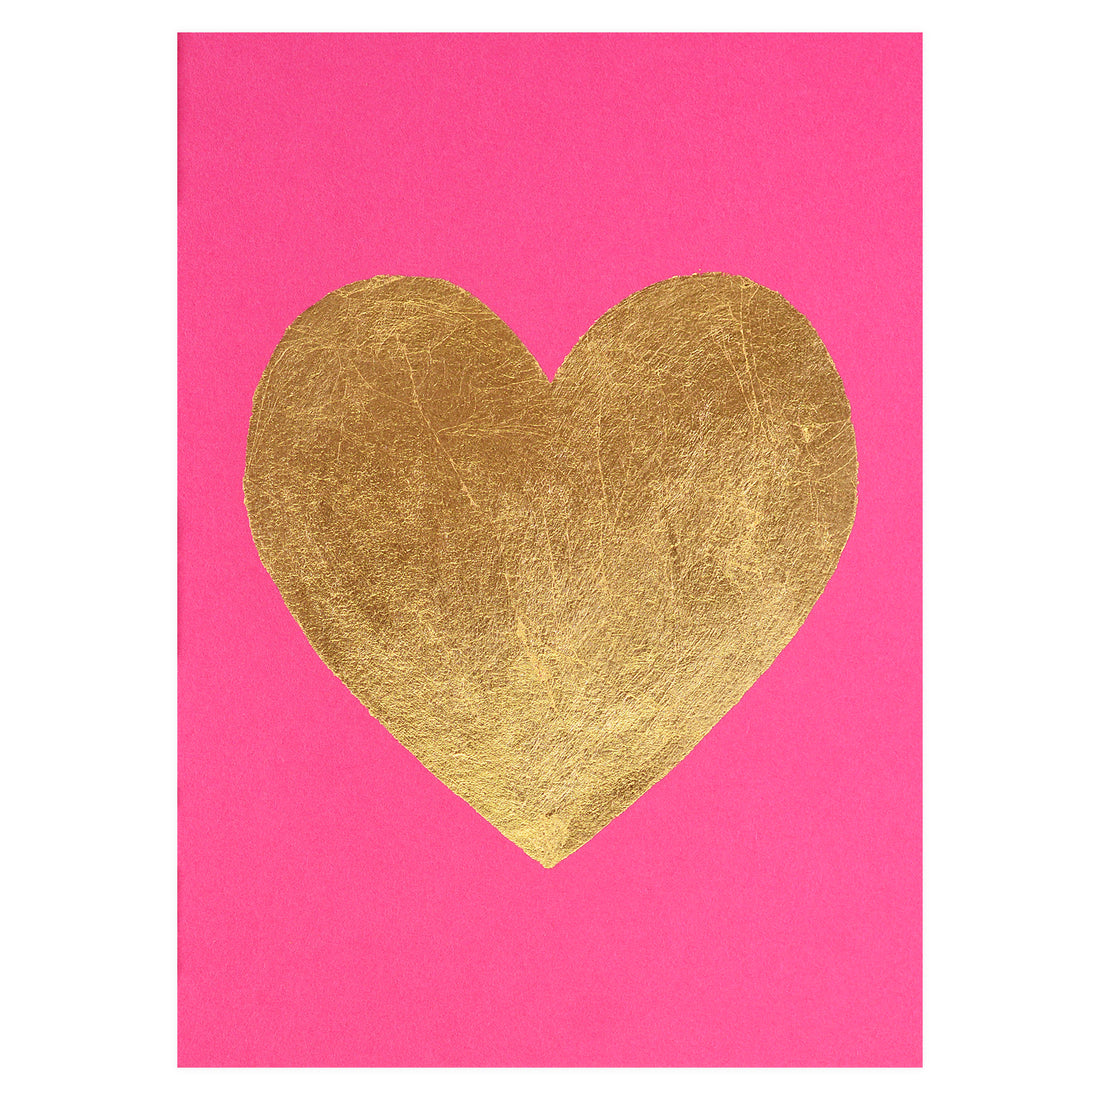 Catherine Greenup Heart Gold Leaf Greeting Card Fuchsia 